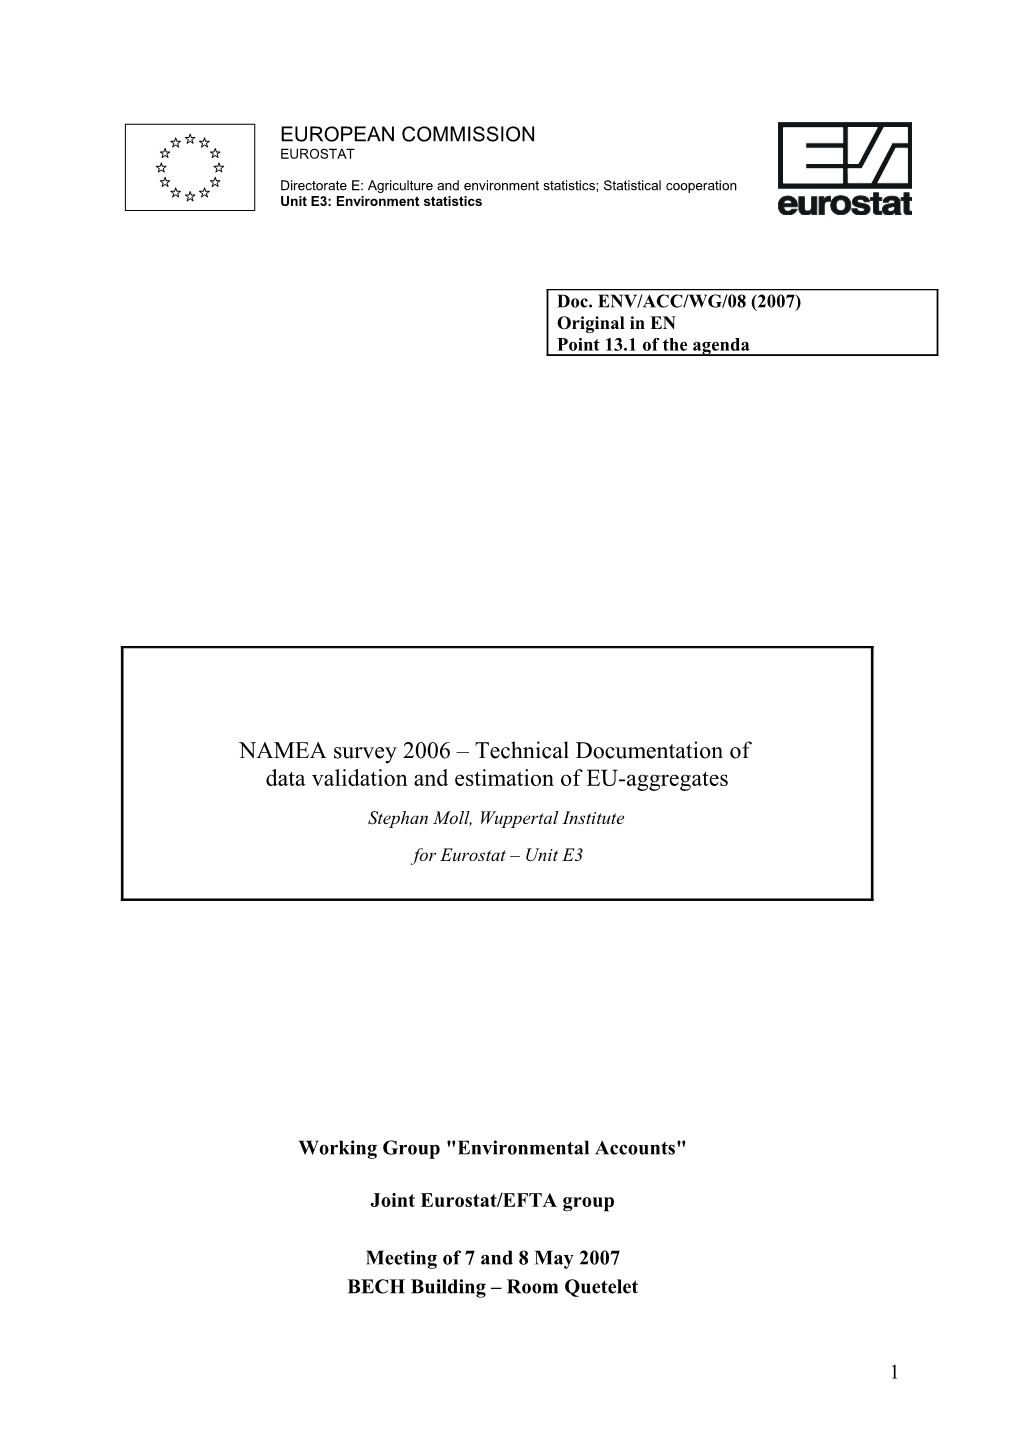 NAMEA Survey 2006 Technical Documentation of Data Validation and Estimation of EU-Aggregates